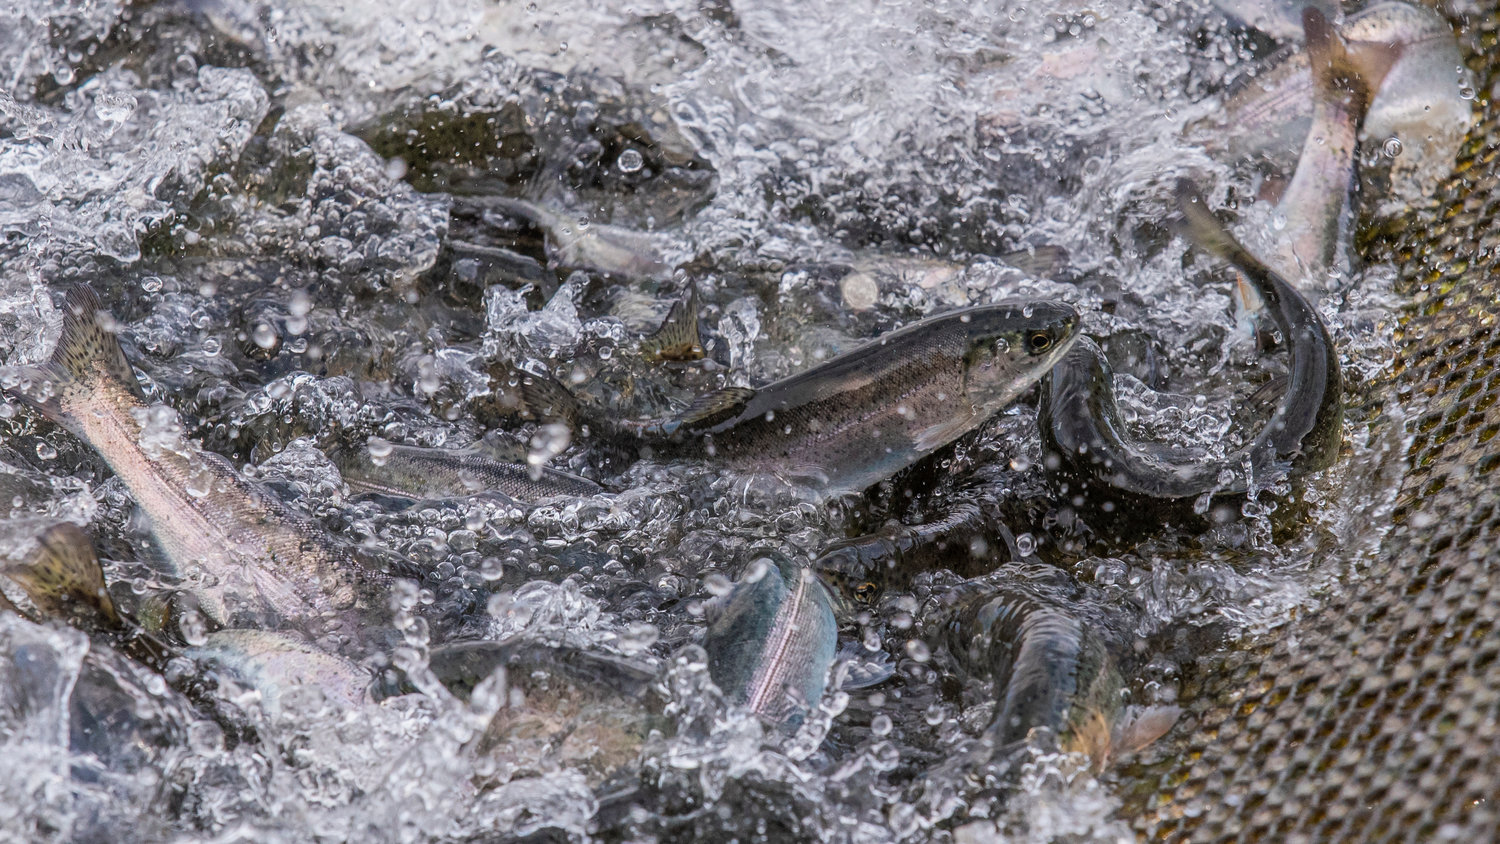 Steelhead splash in water as their net is constricted Friday morning in Onalaska.